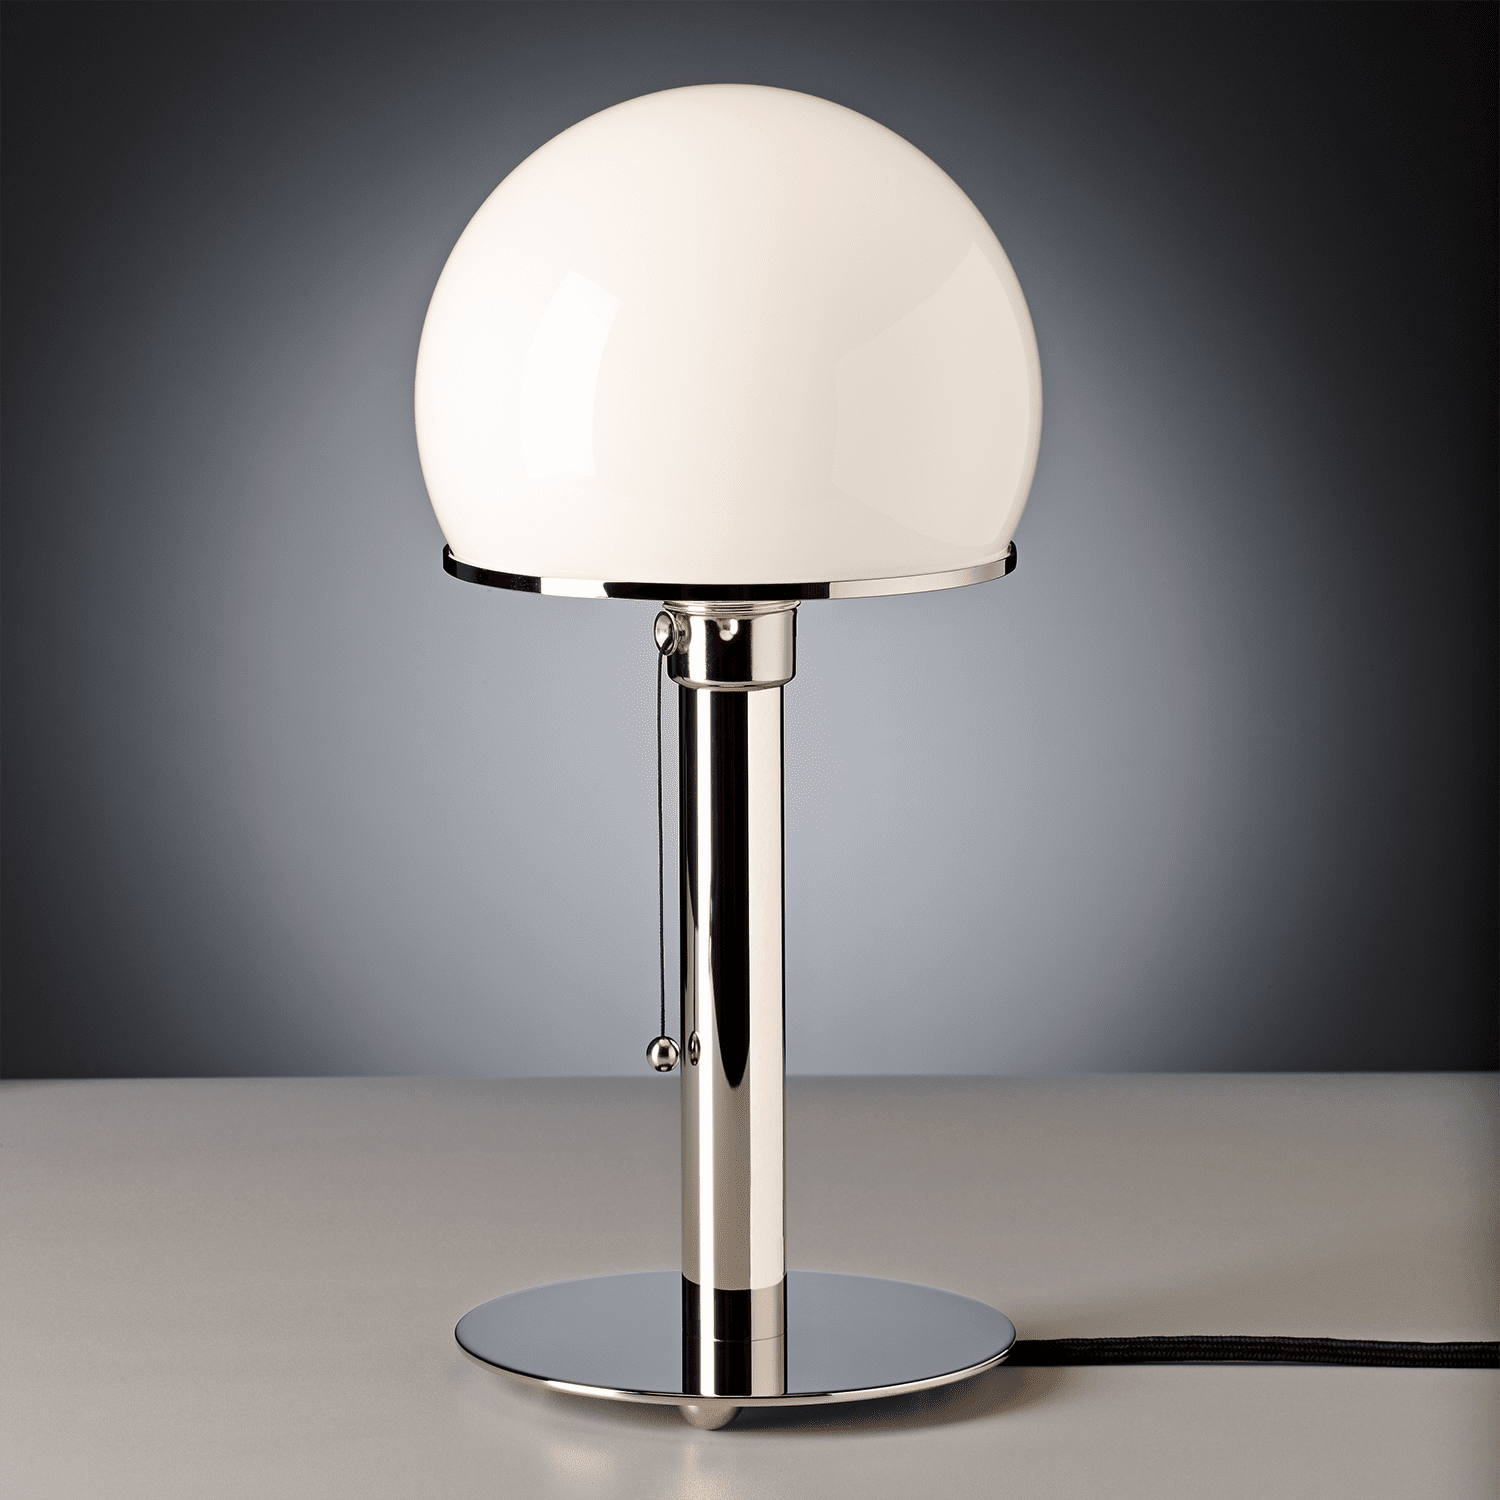 Bauhaus Wagenfeld Lamp Wa 24 By, 36 High Table Lamps